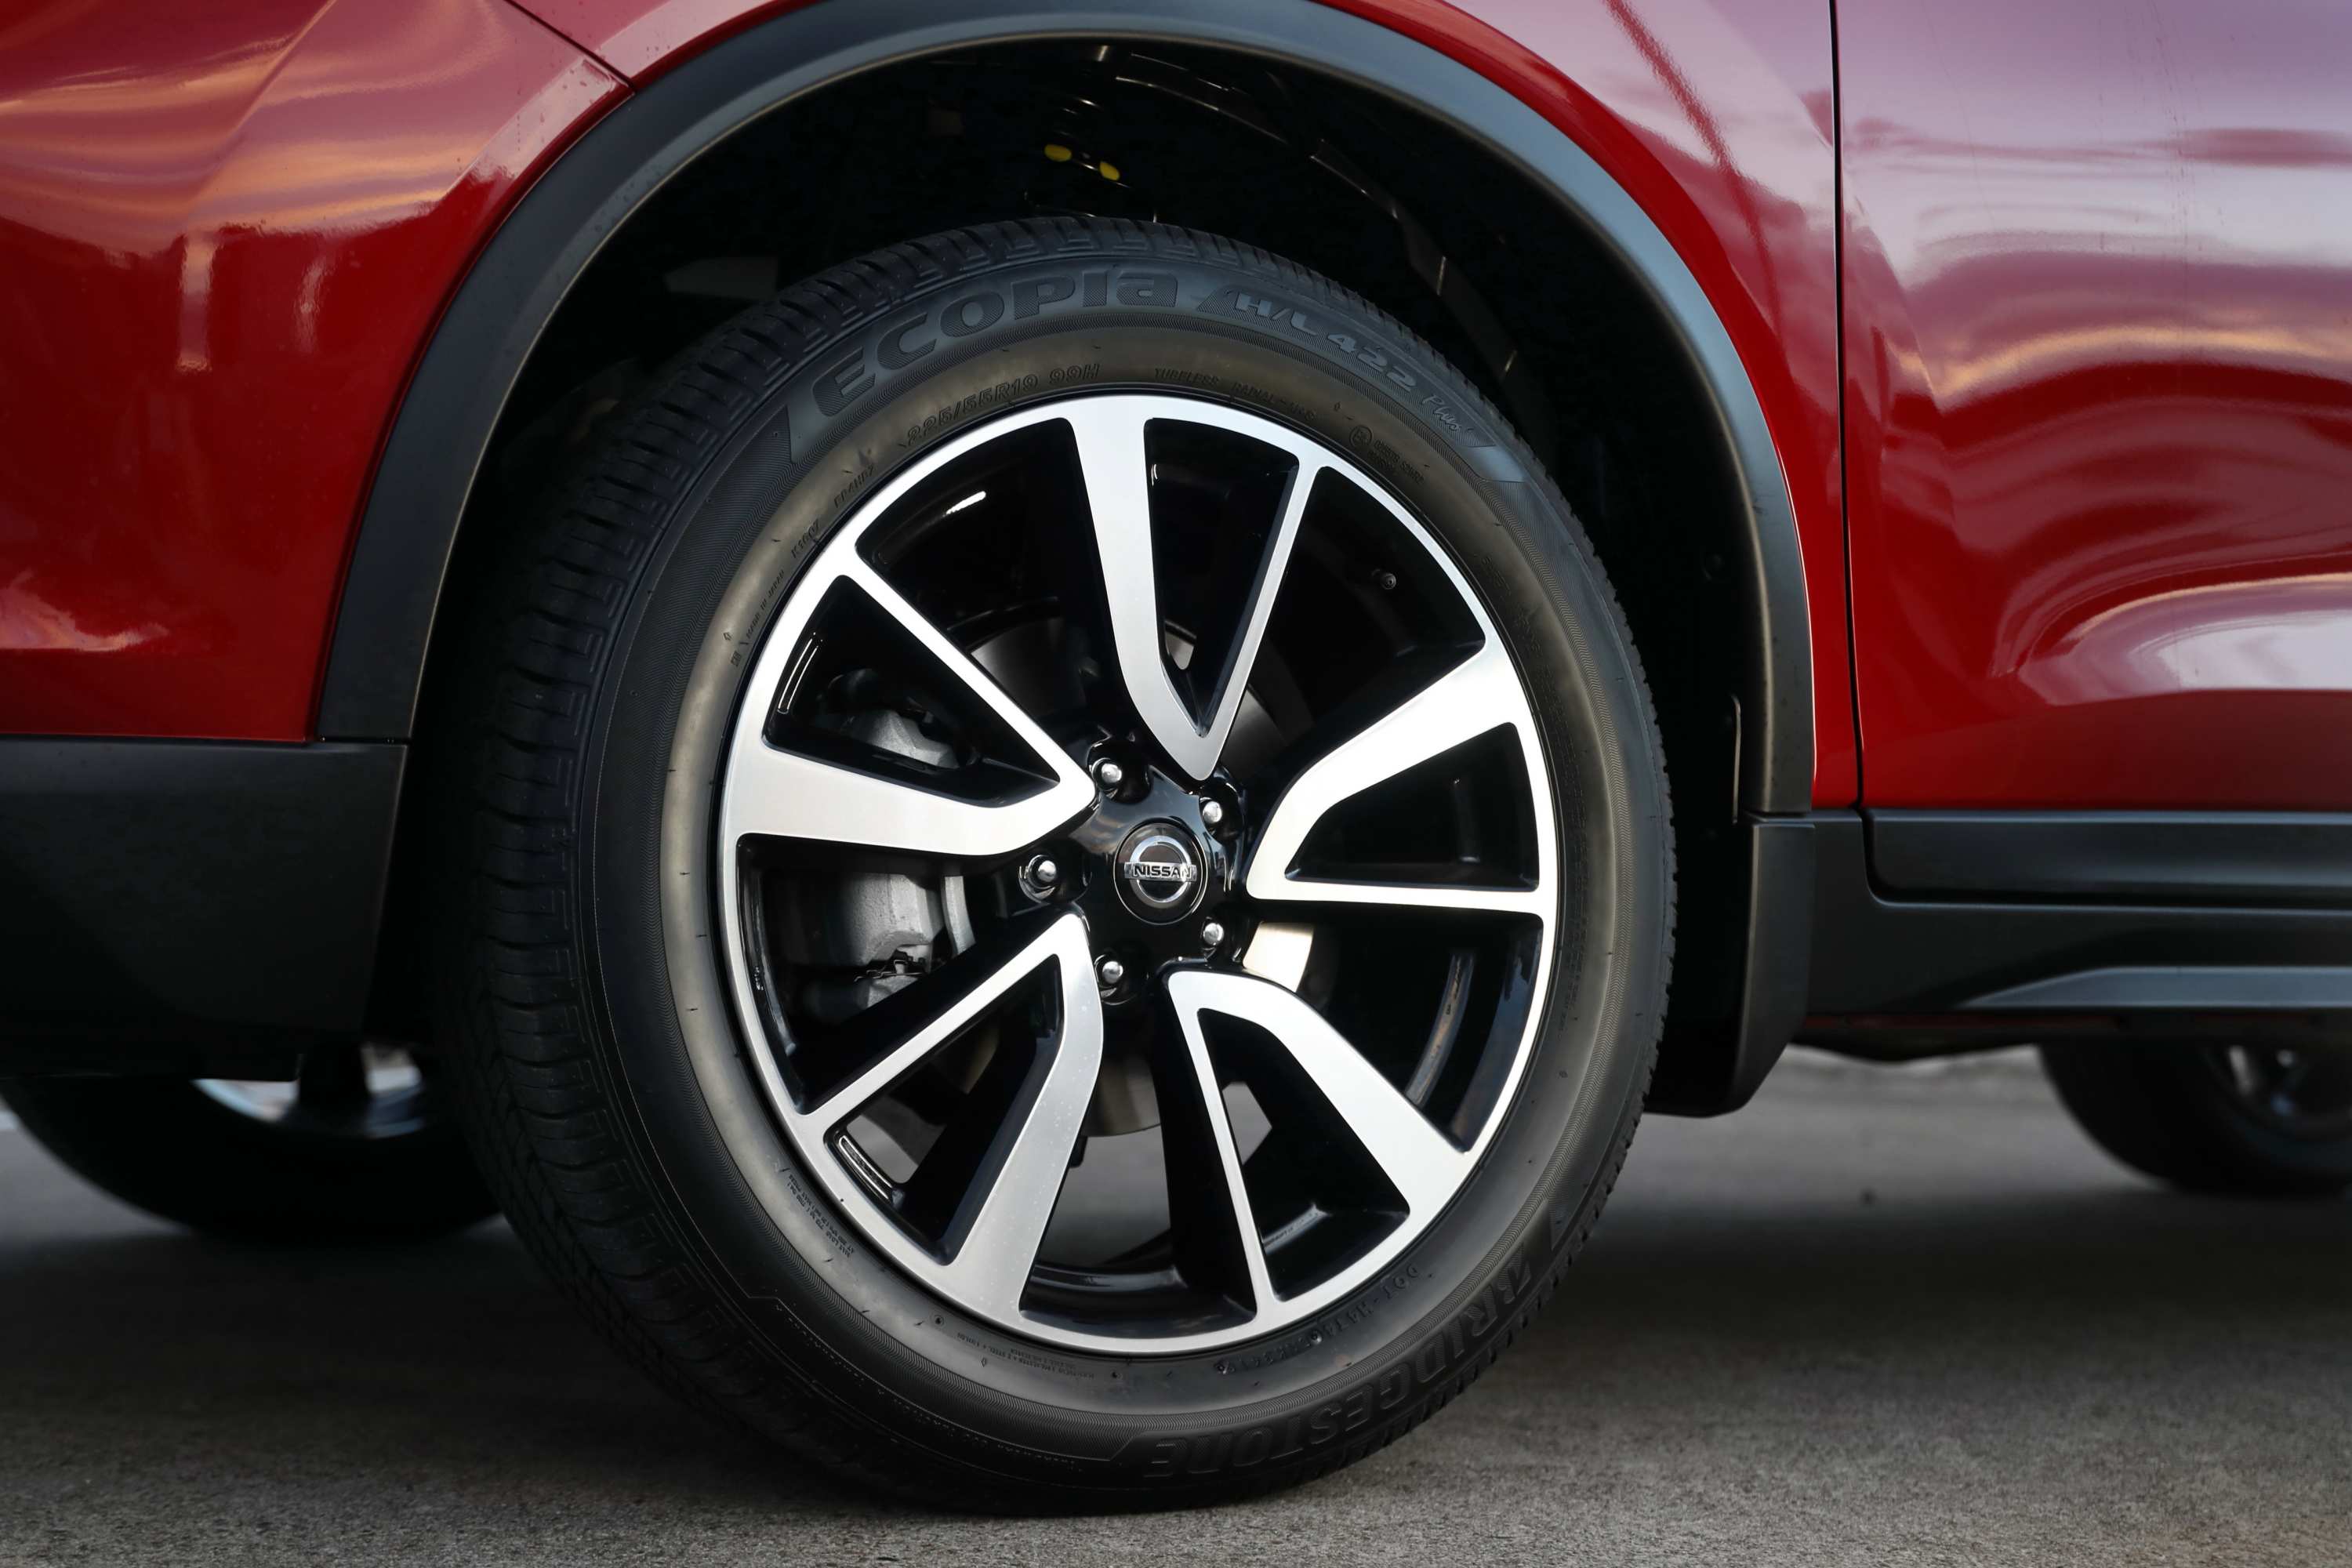 Nissan X-Trail N-TREK 3 alloy wheels